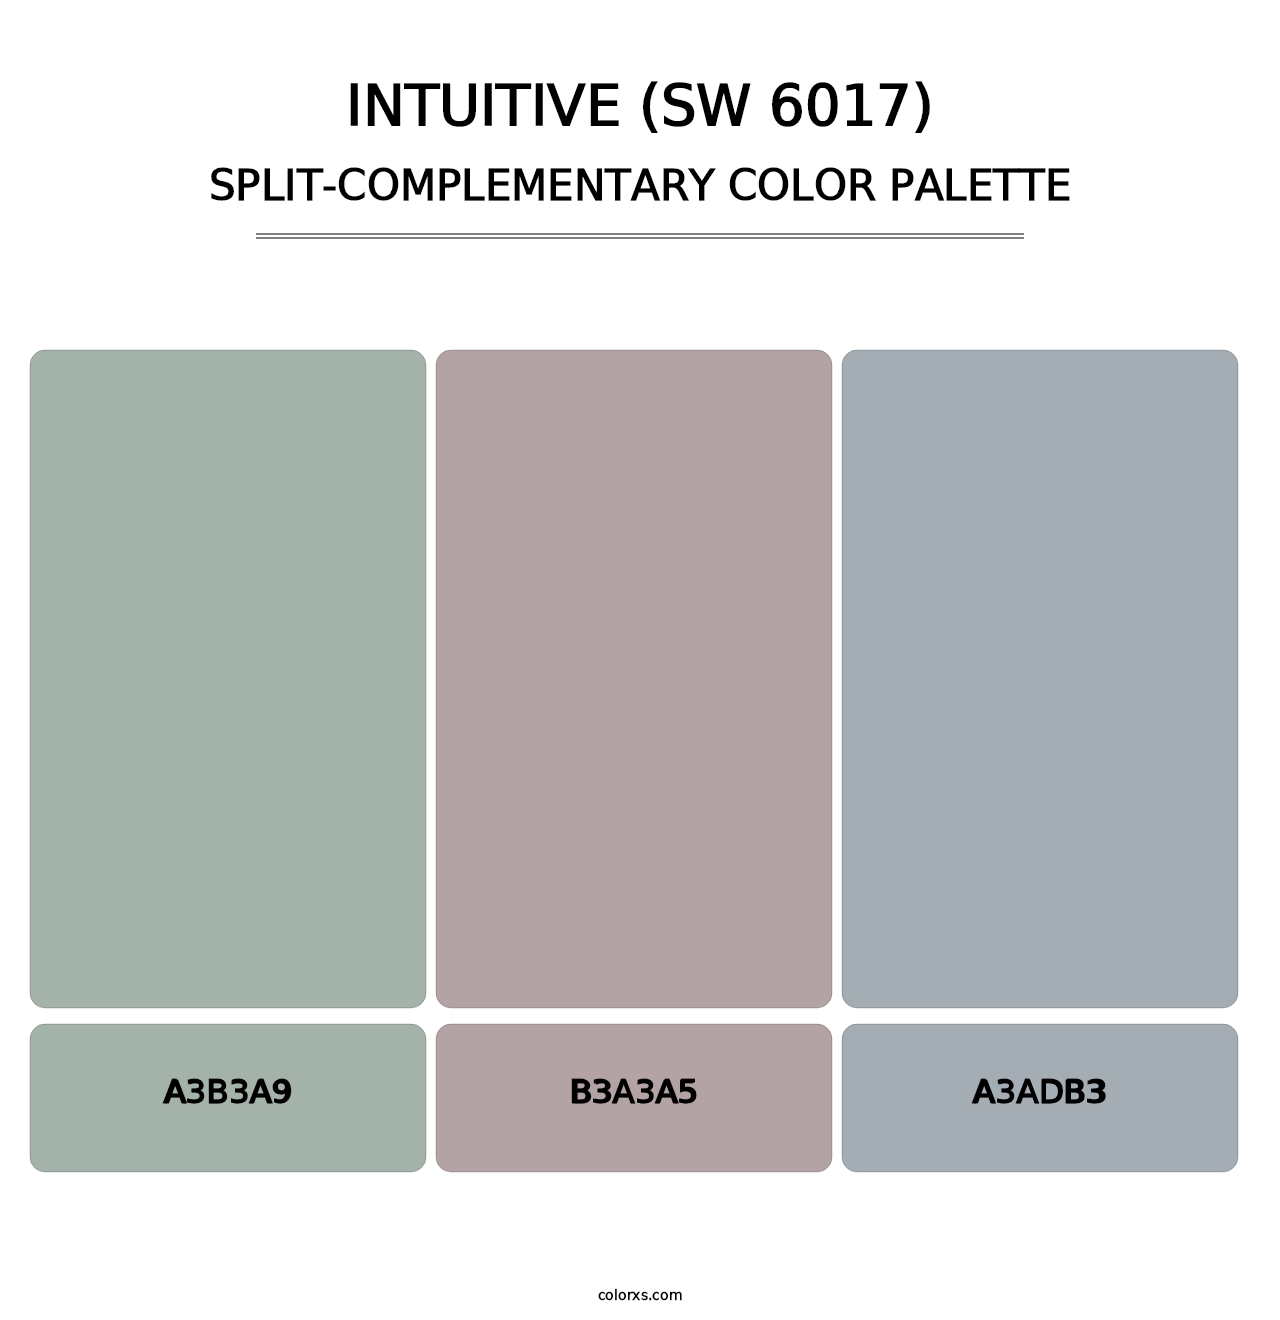 Intuitive (SW 6017) - Split-Complementary Color Palette